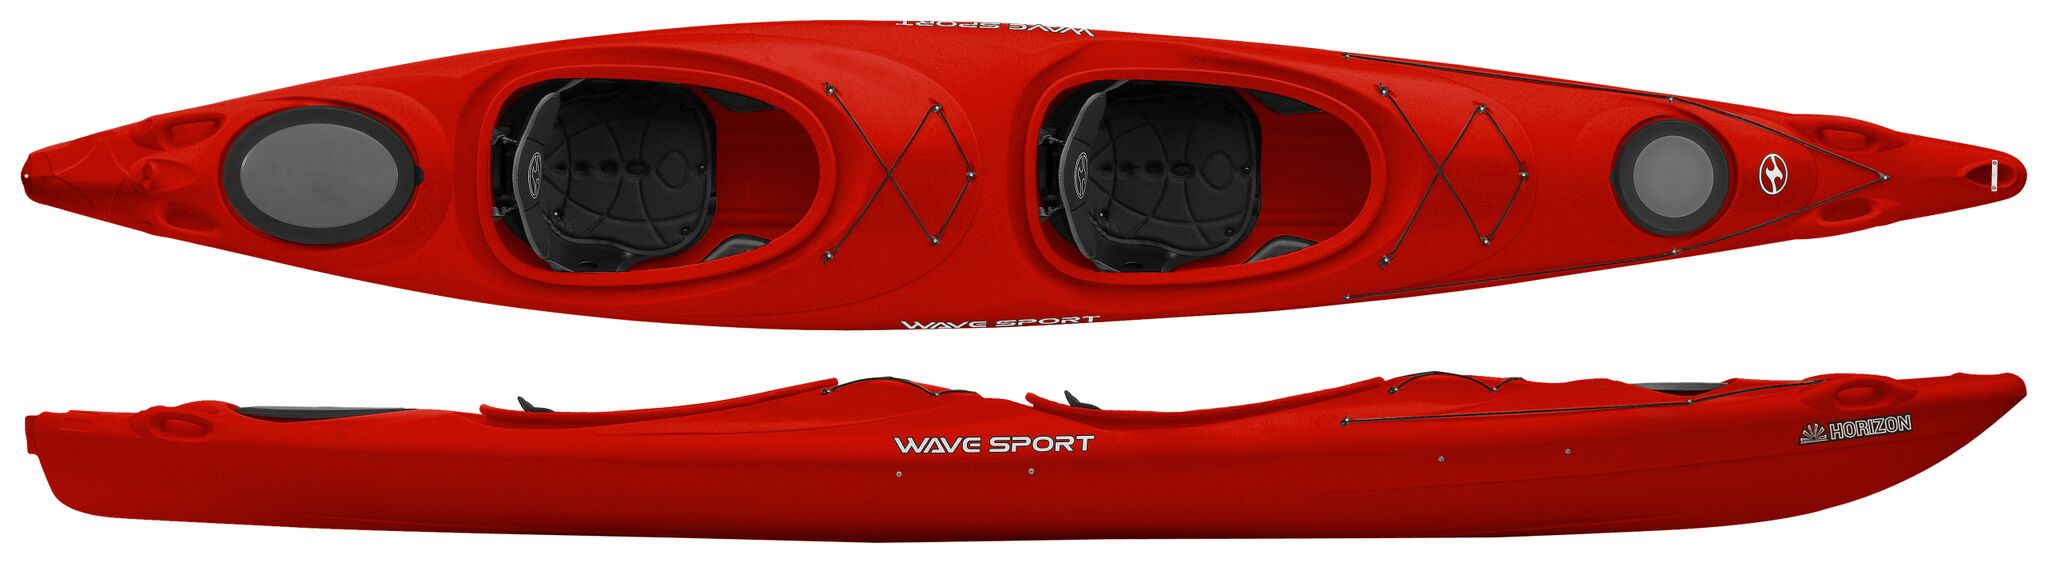 Wave Sport Horizon red.jpeg